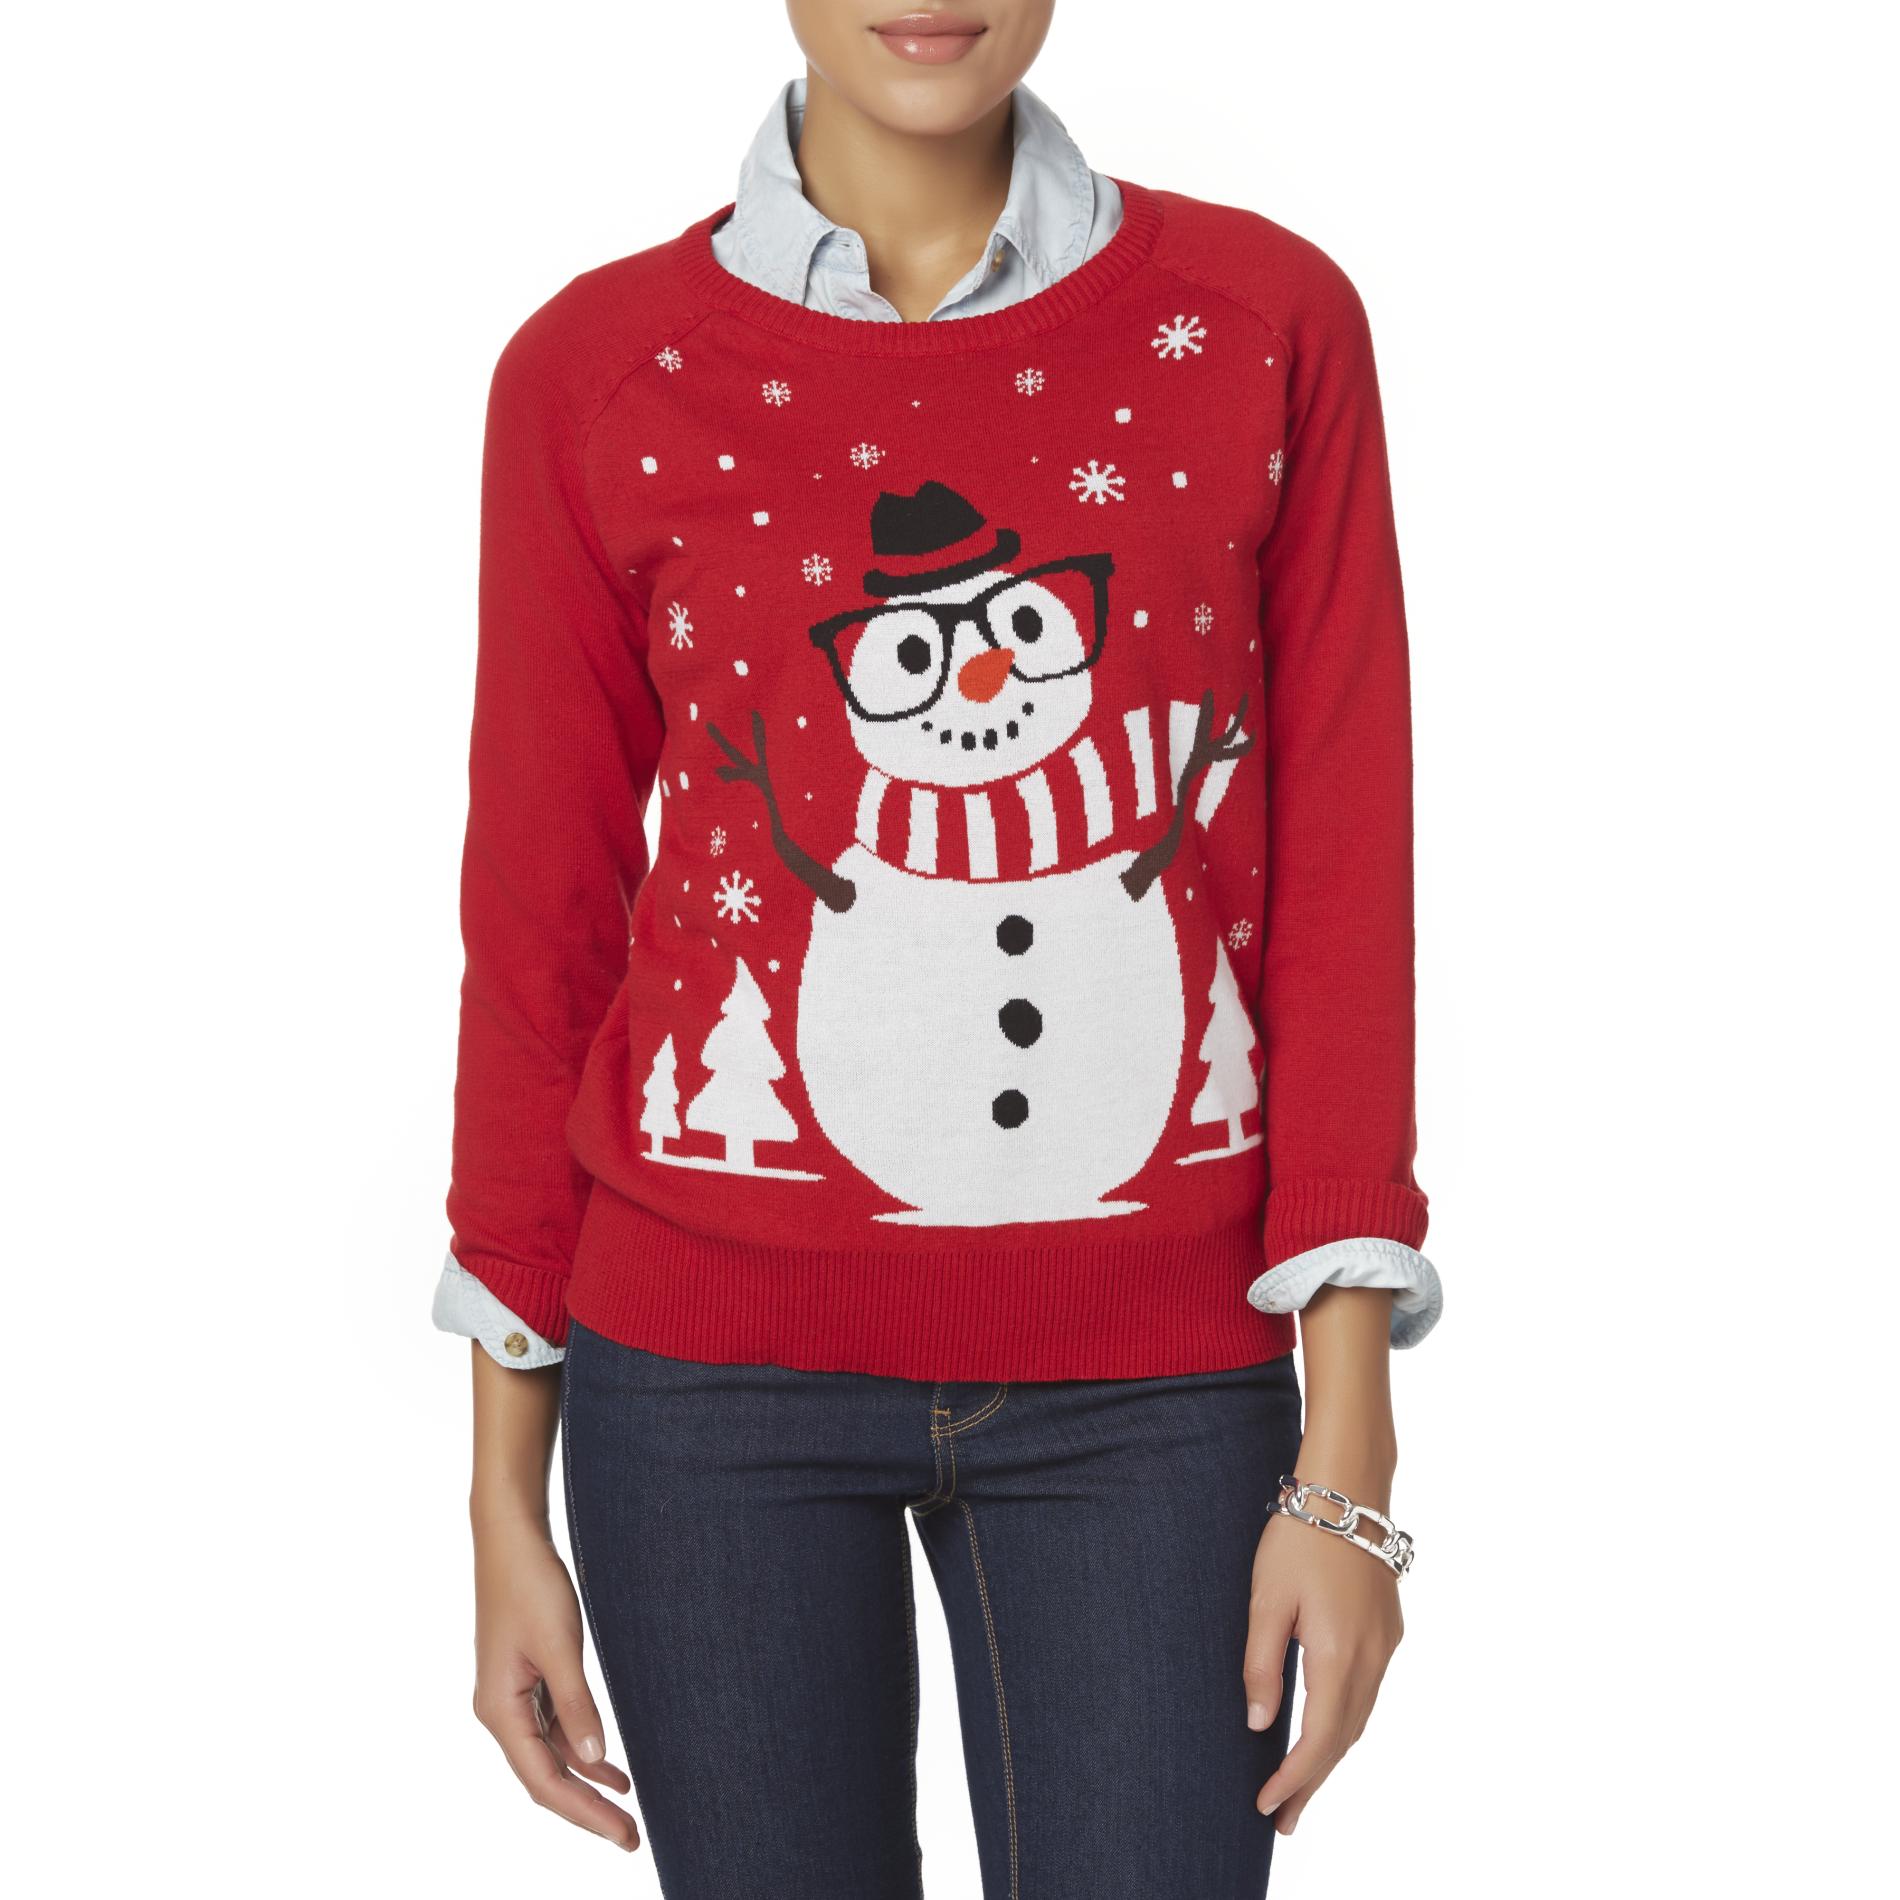 Hybrid Juniors' Christmas Sweater - Nerdy Snowman